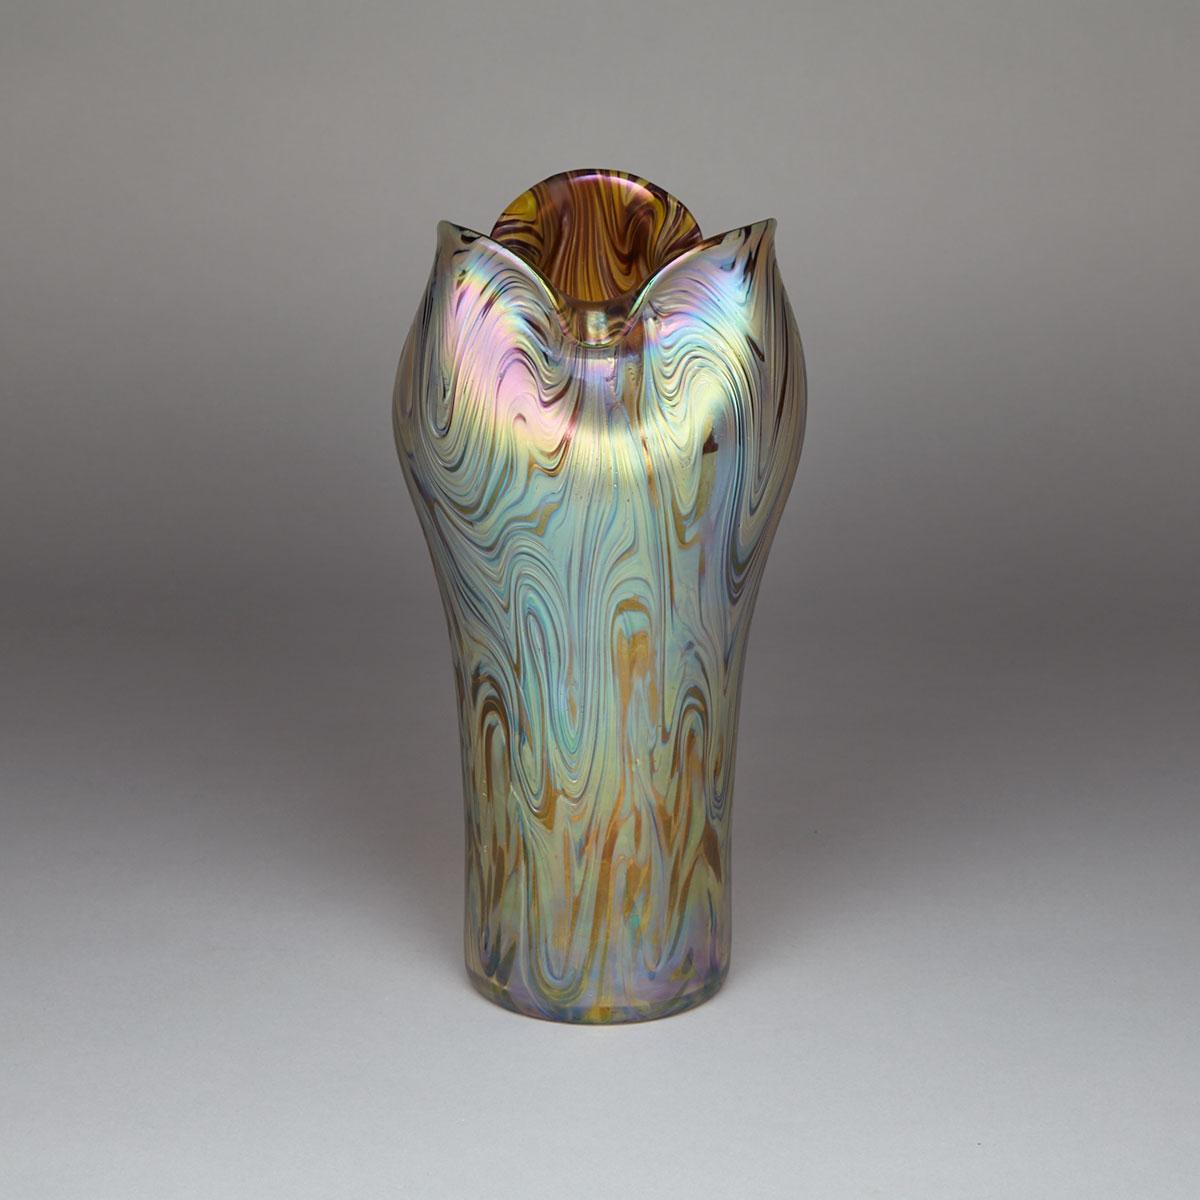 Rindskopf Iridescent Glass Vase, early 20th century